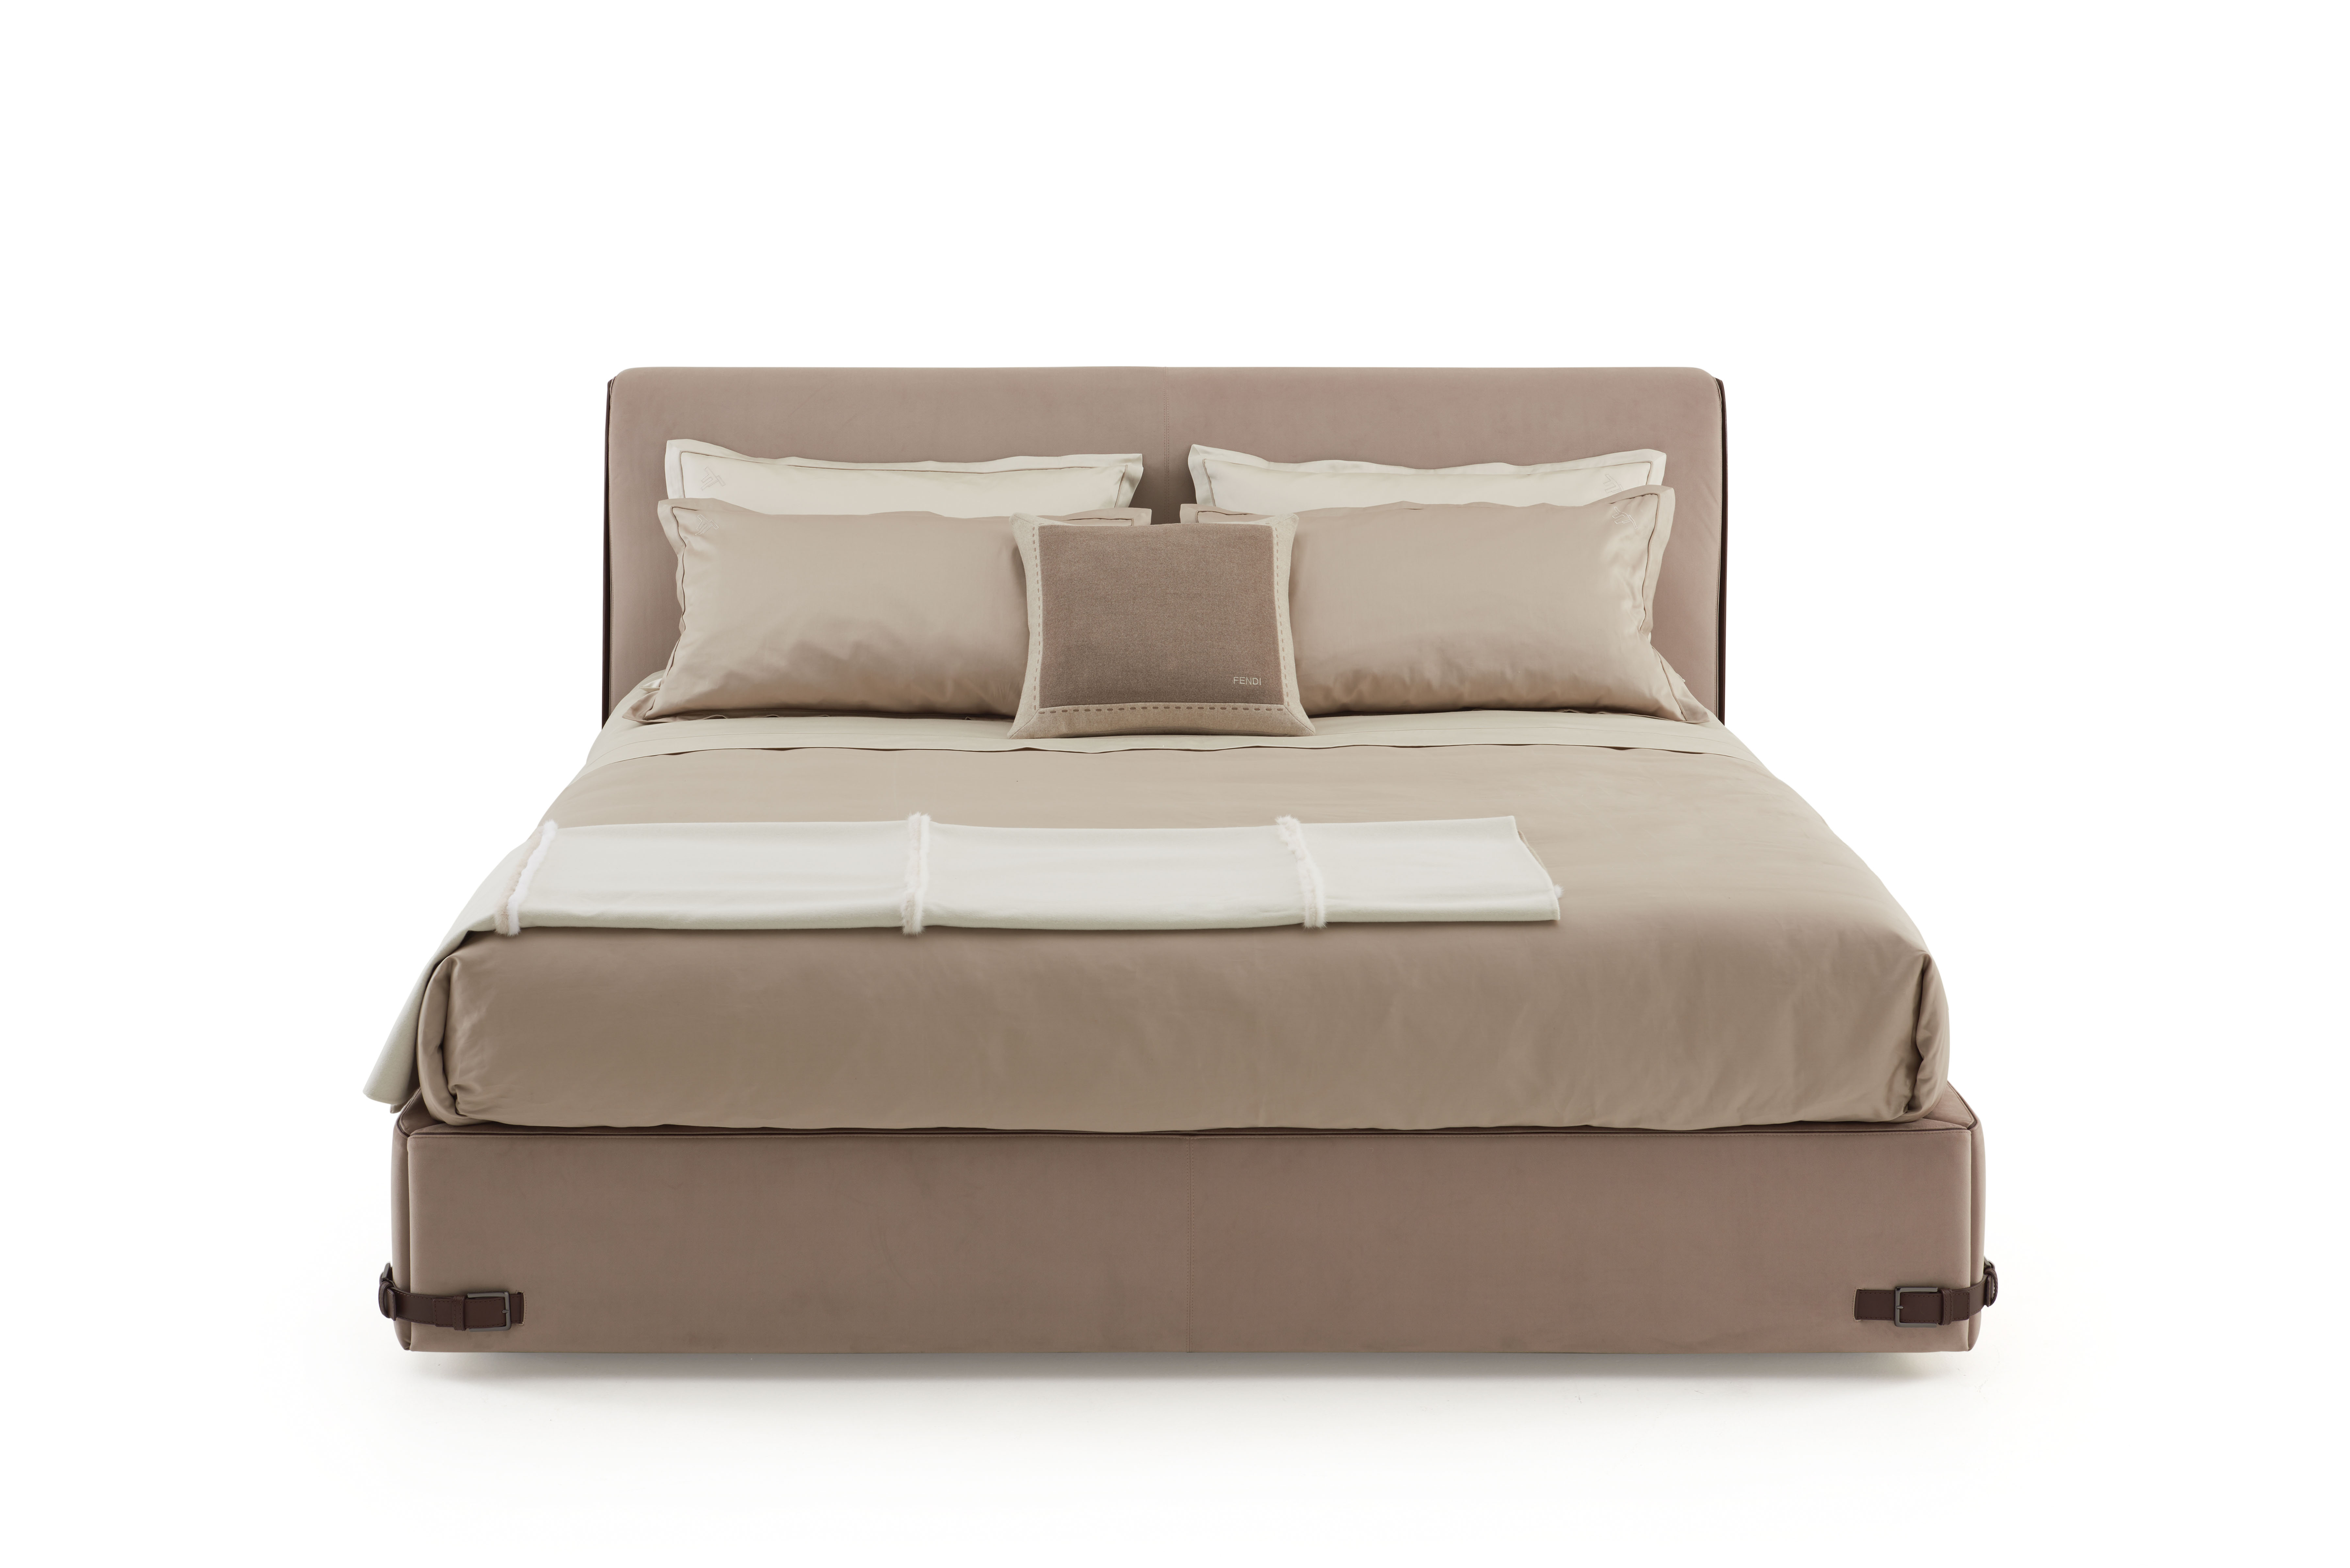 FENDI Soho bed, design Toan Nguyen